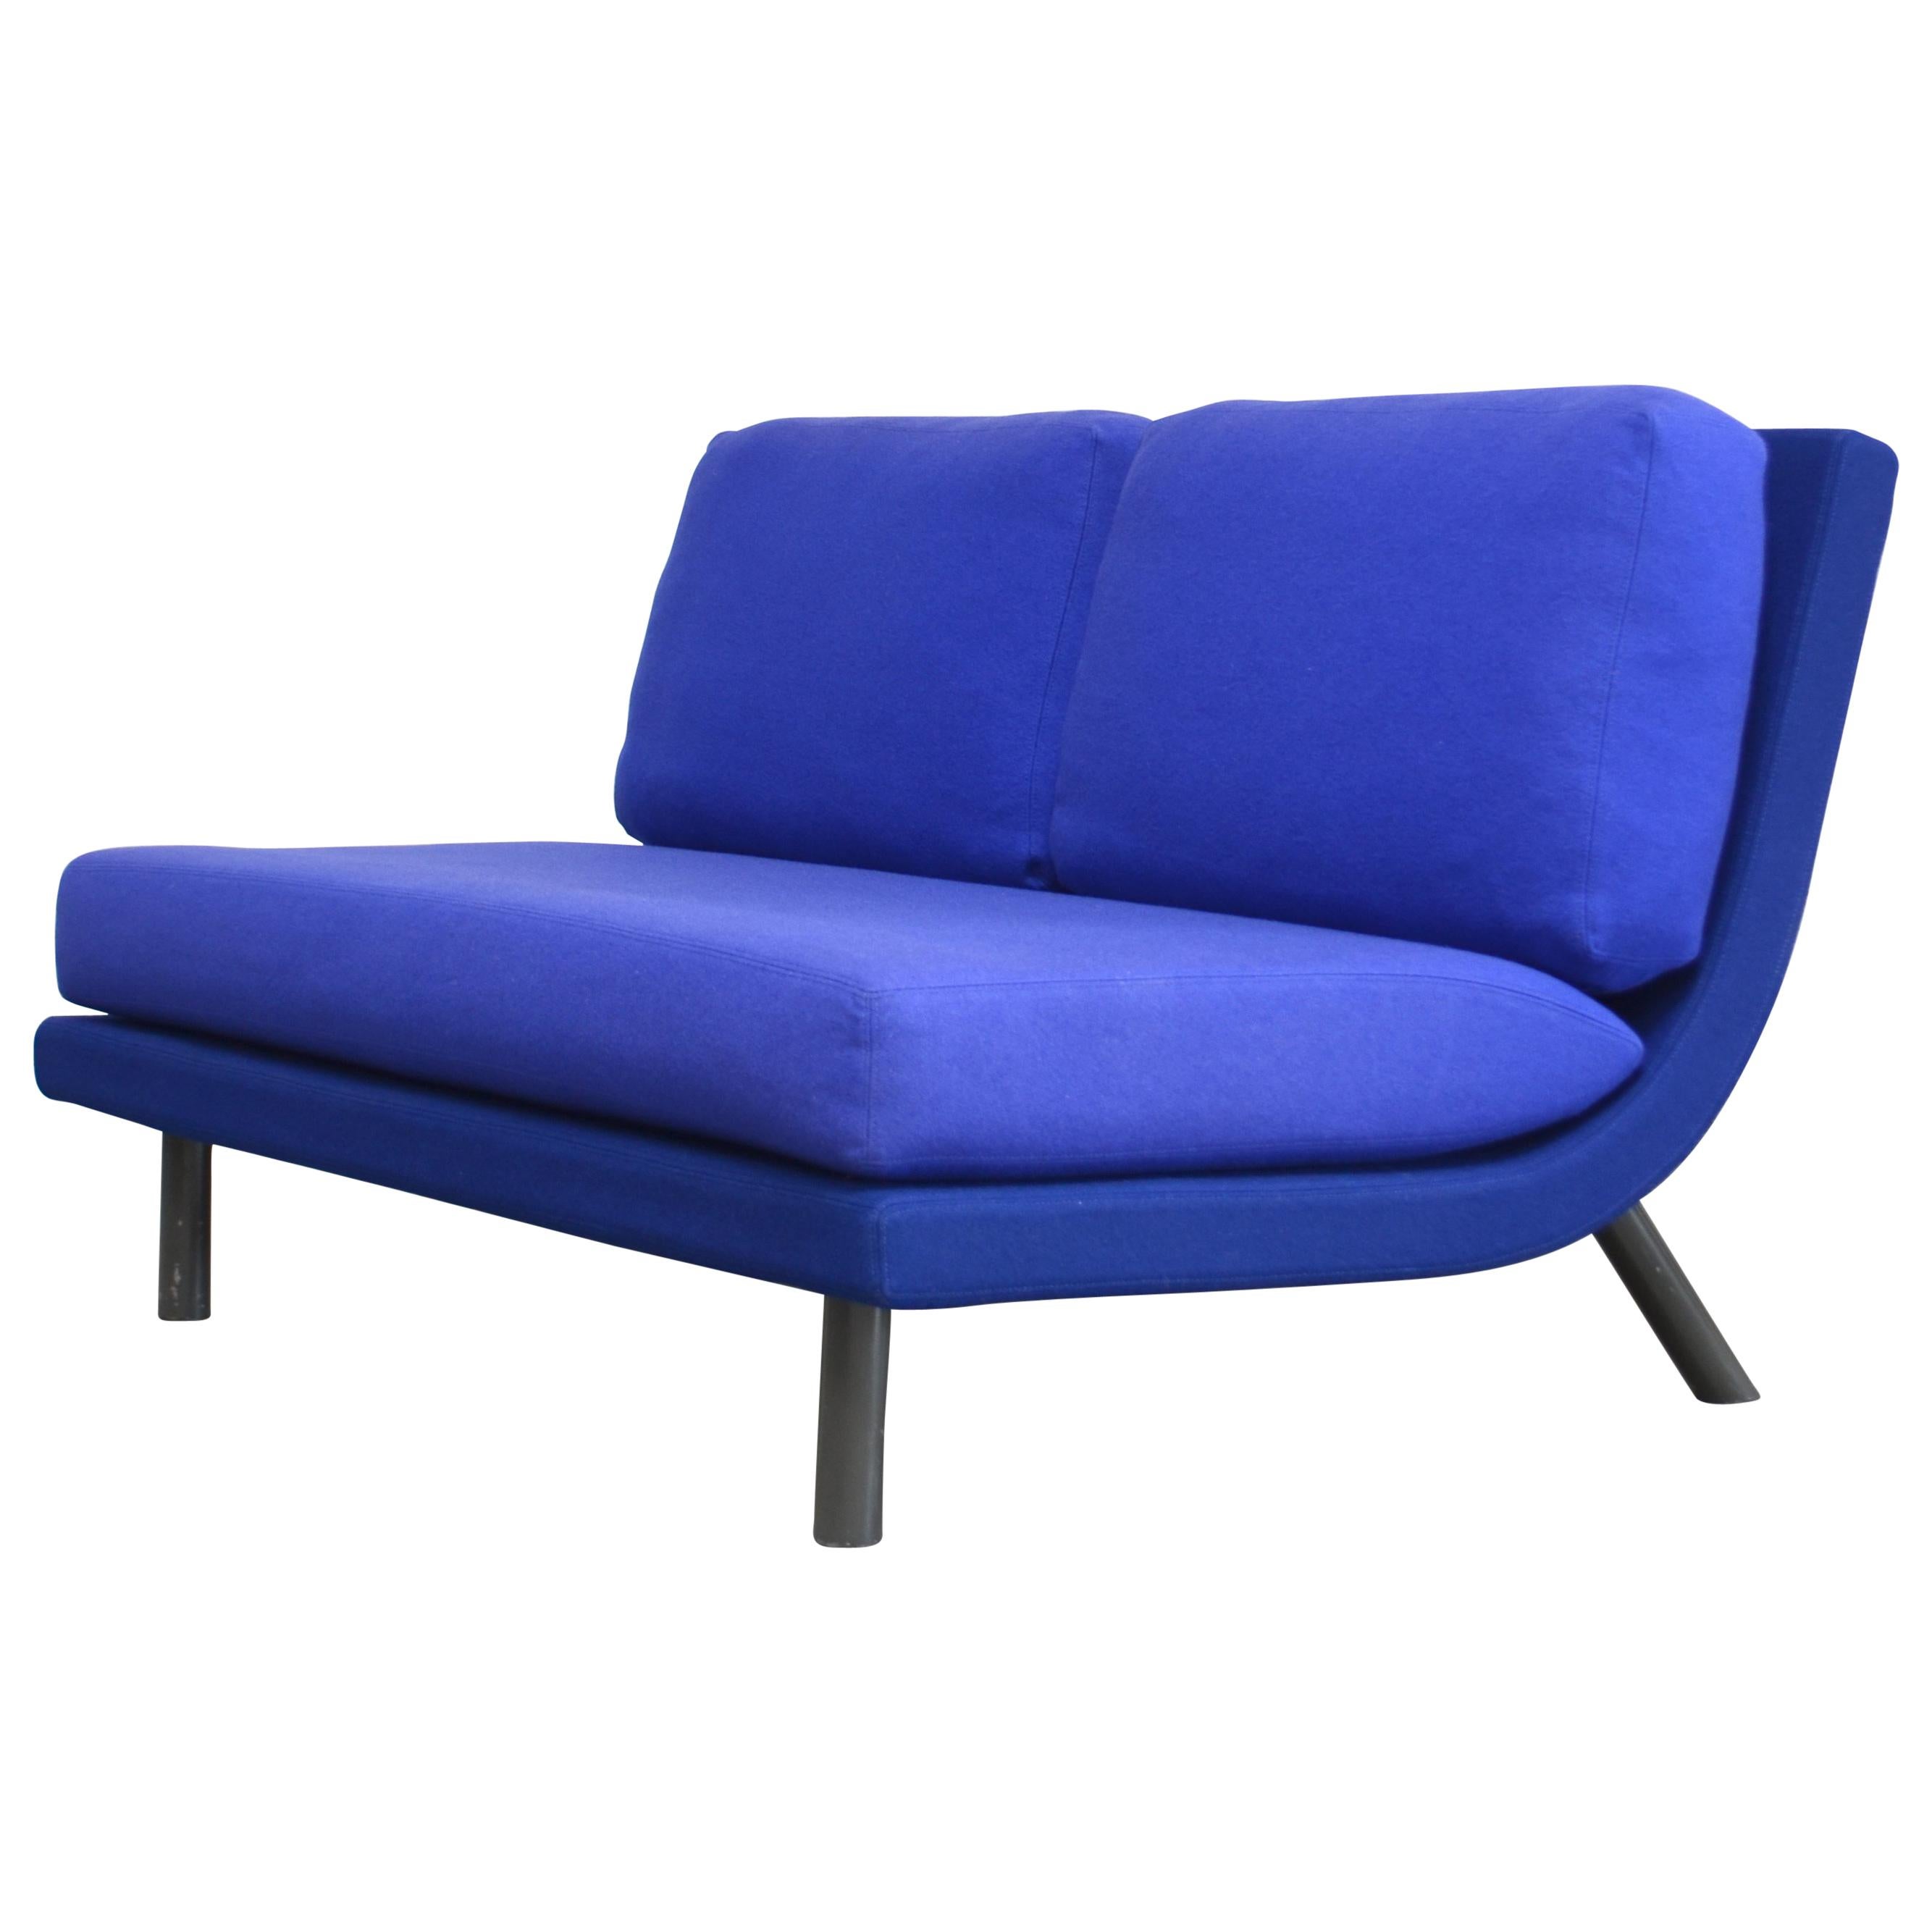 Rare Prototype Sofa Design by David Chipperfield for Interlübke